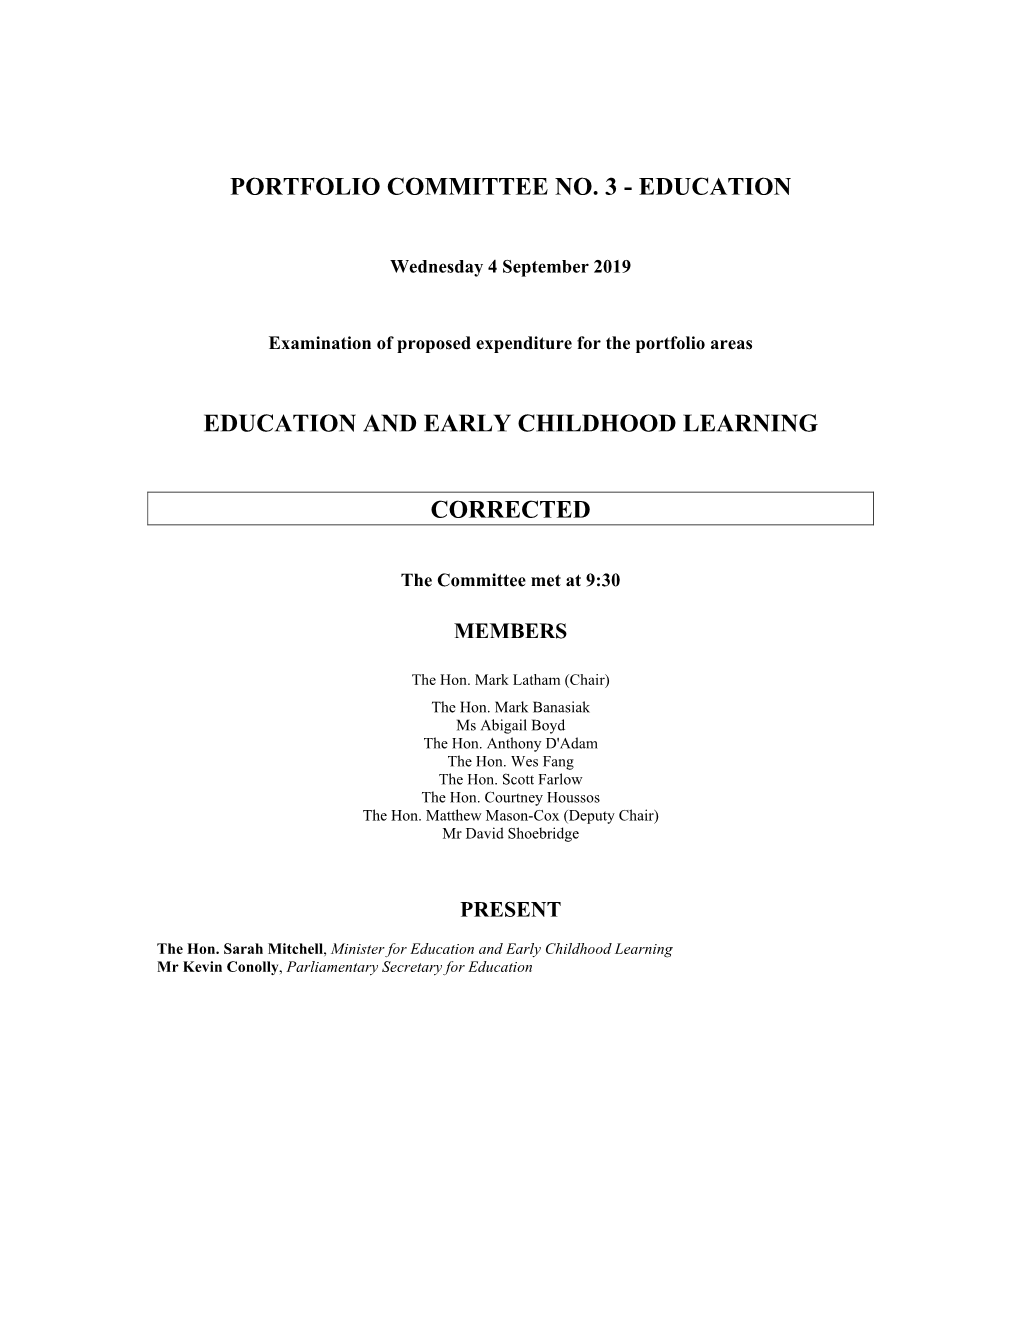 Transcript of Committee Proceedings